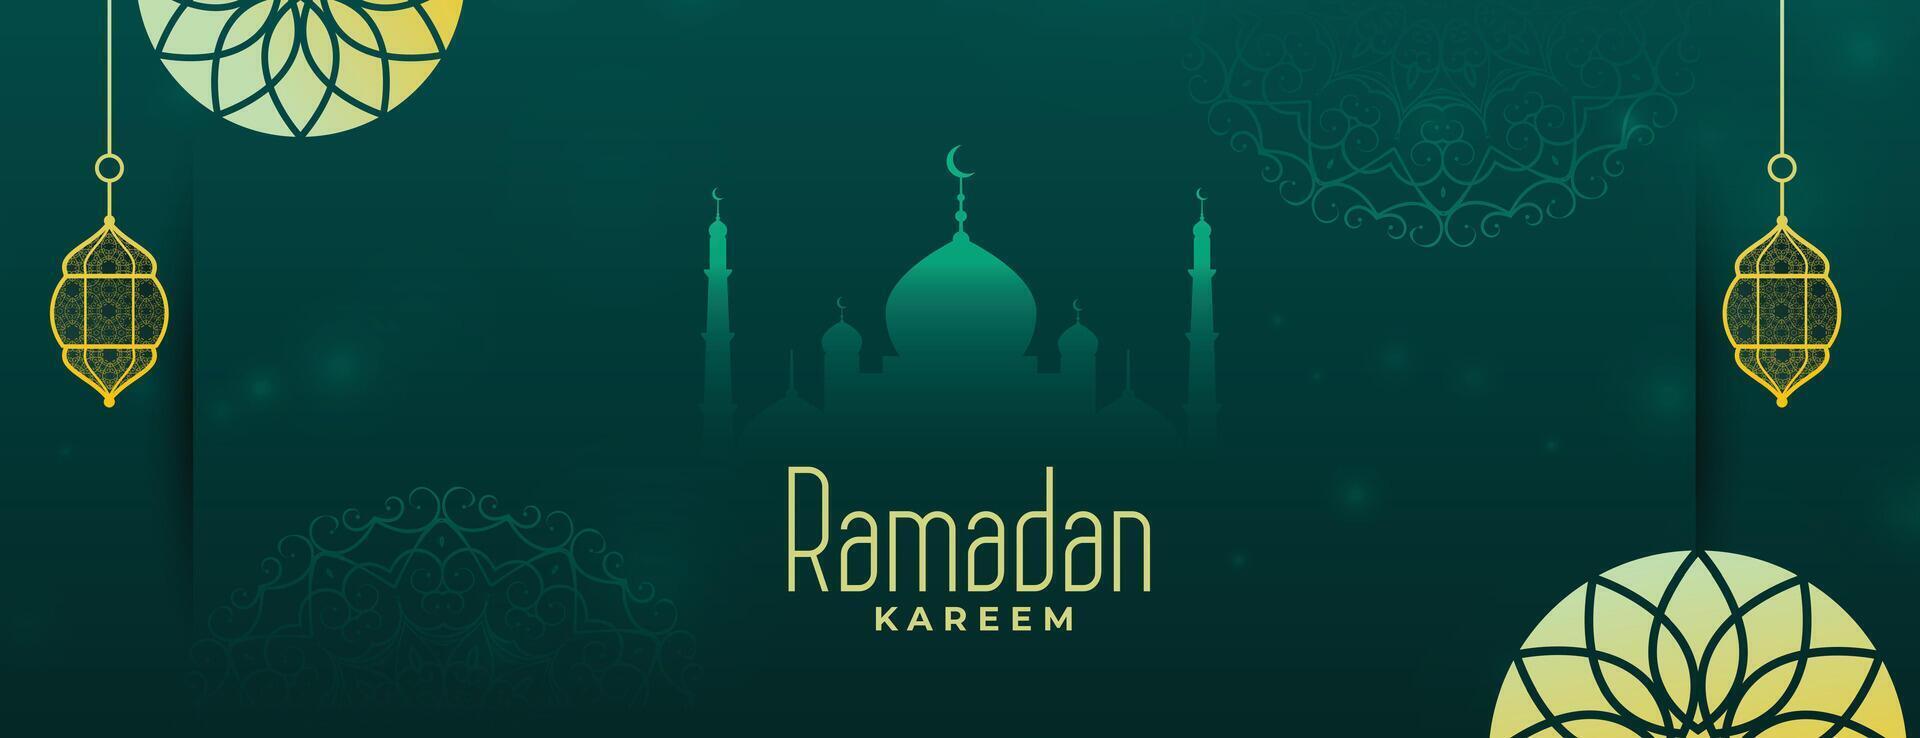 Grün Ramadan kareem eid Festival Arabisch Banner Design vektor